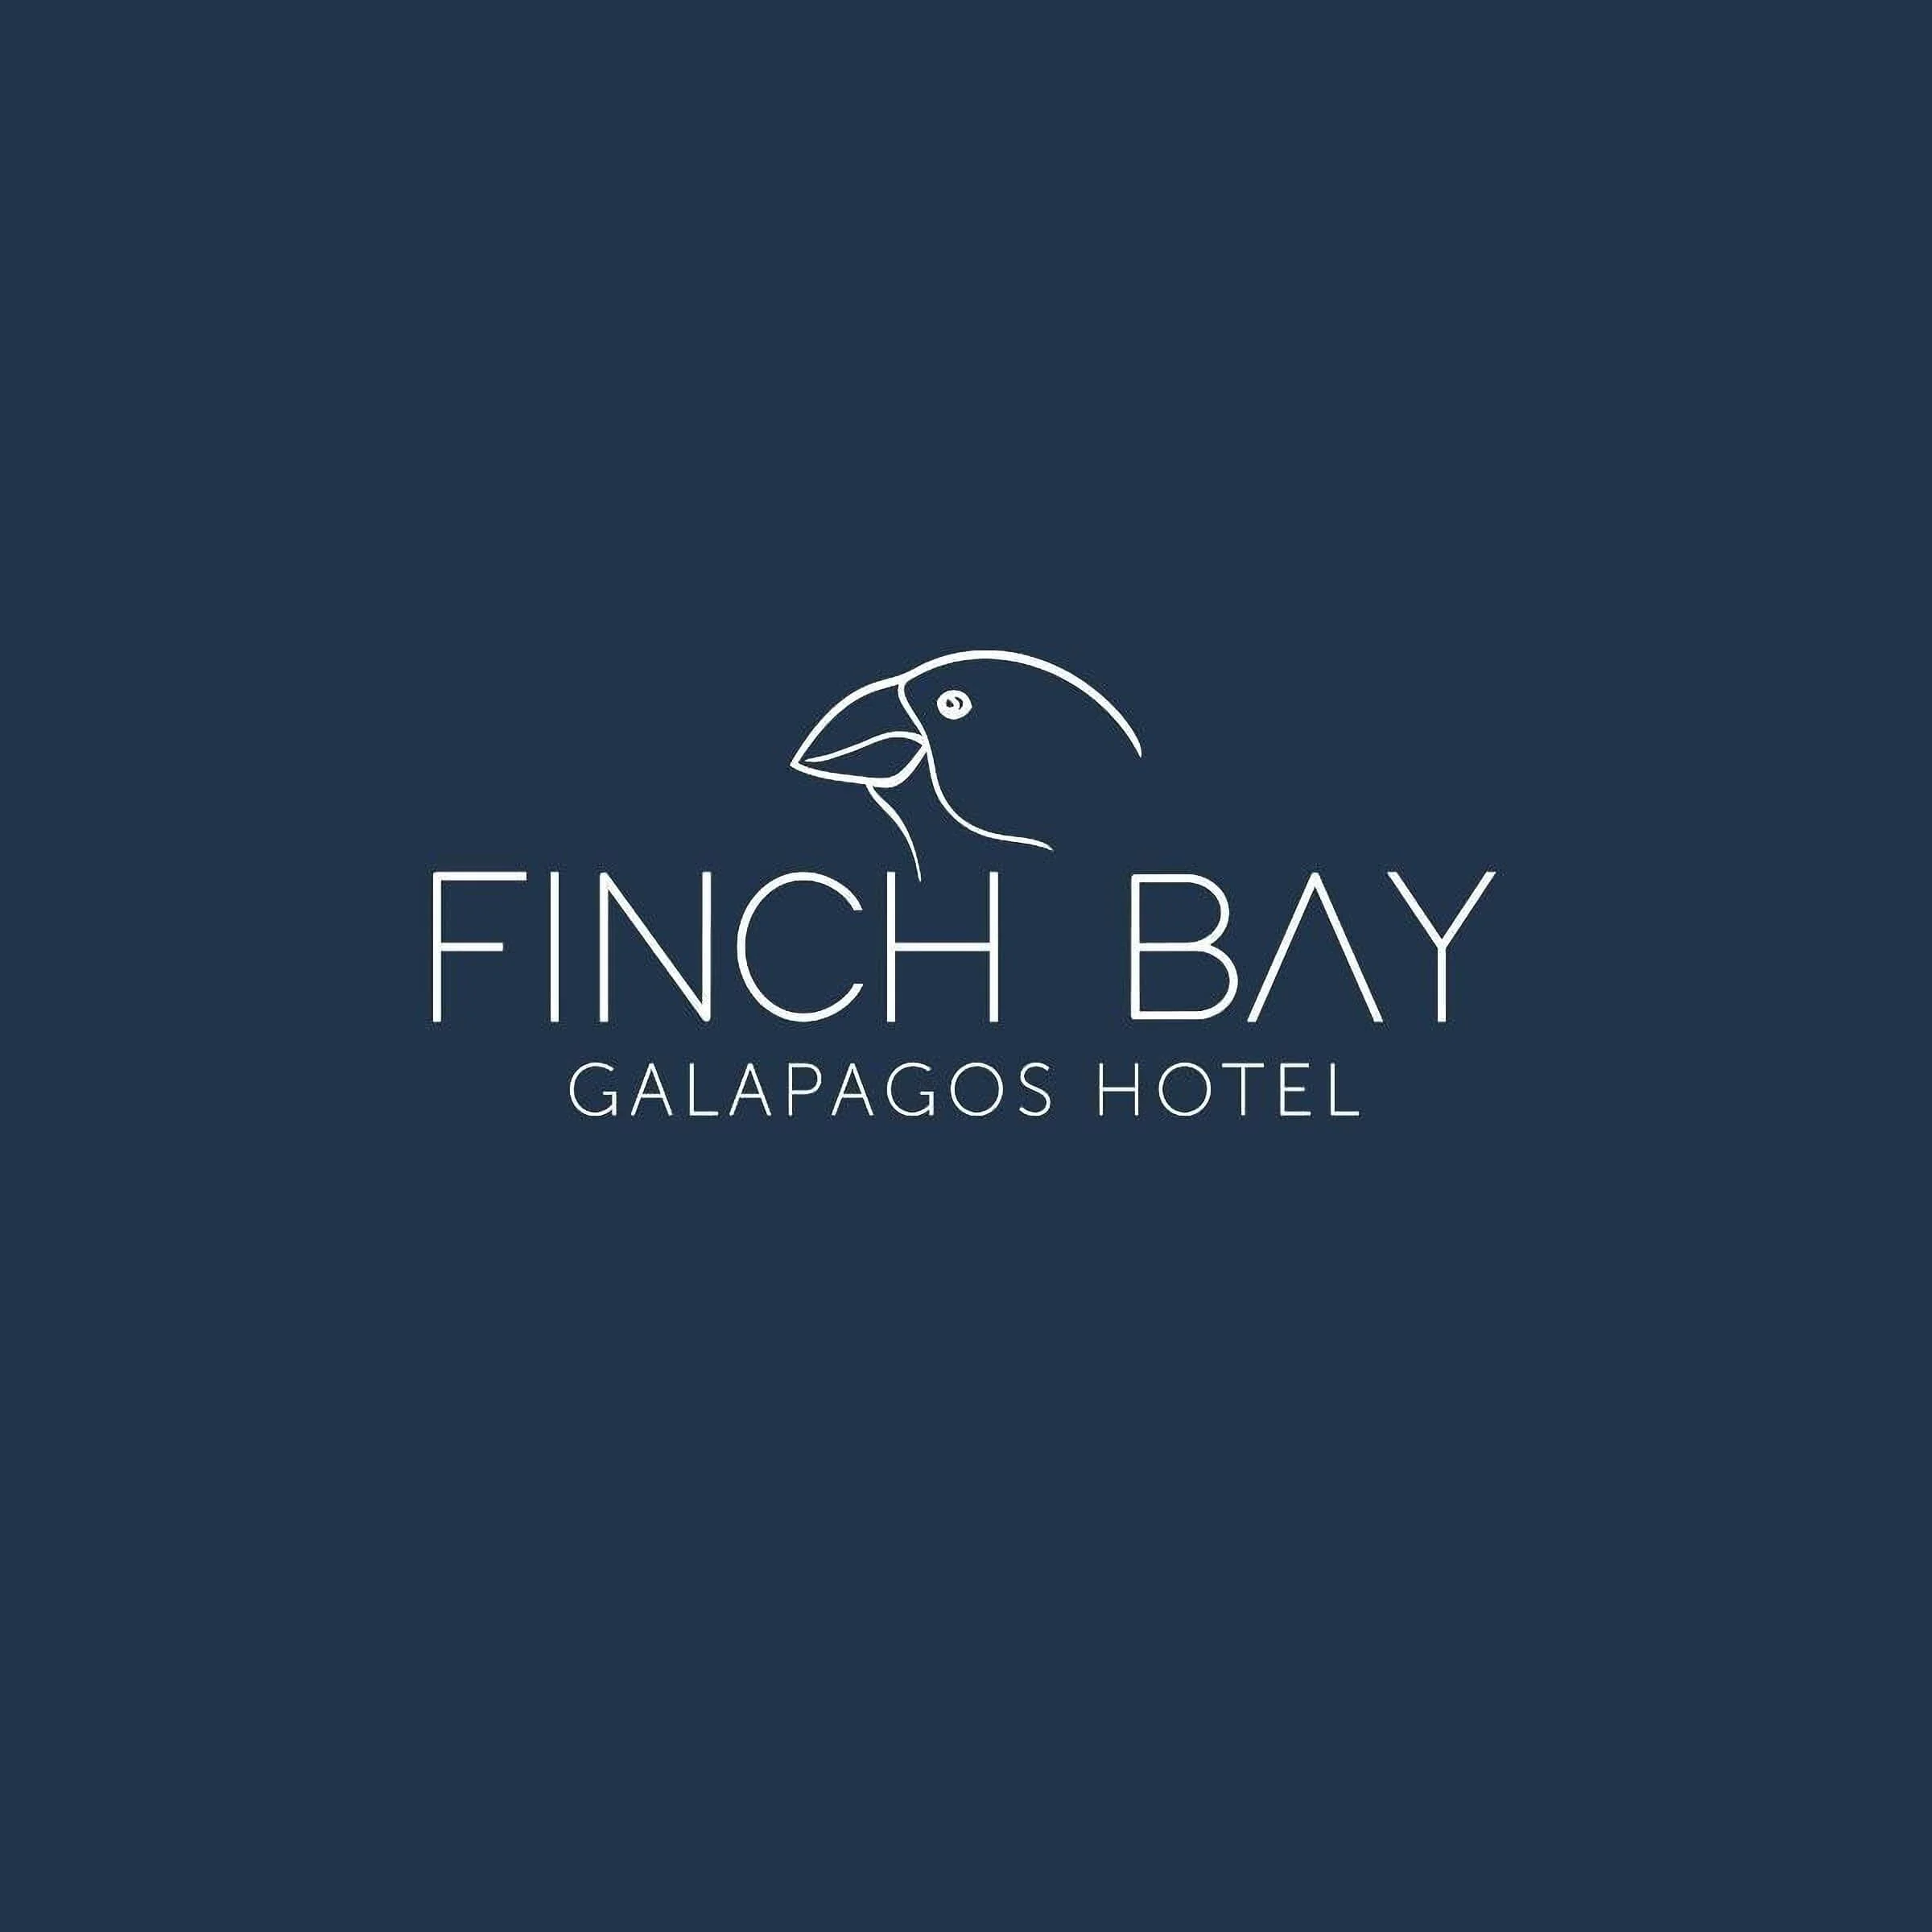 Hoteles-finch-bay-galapagos-hotel-13744